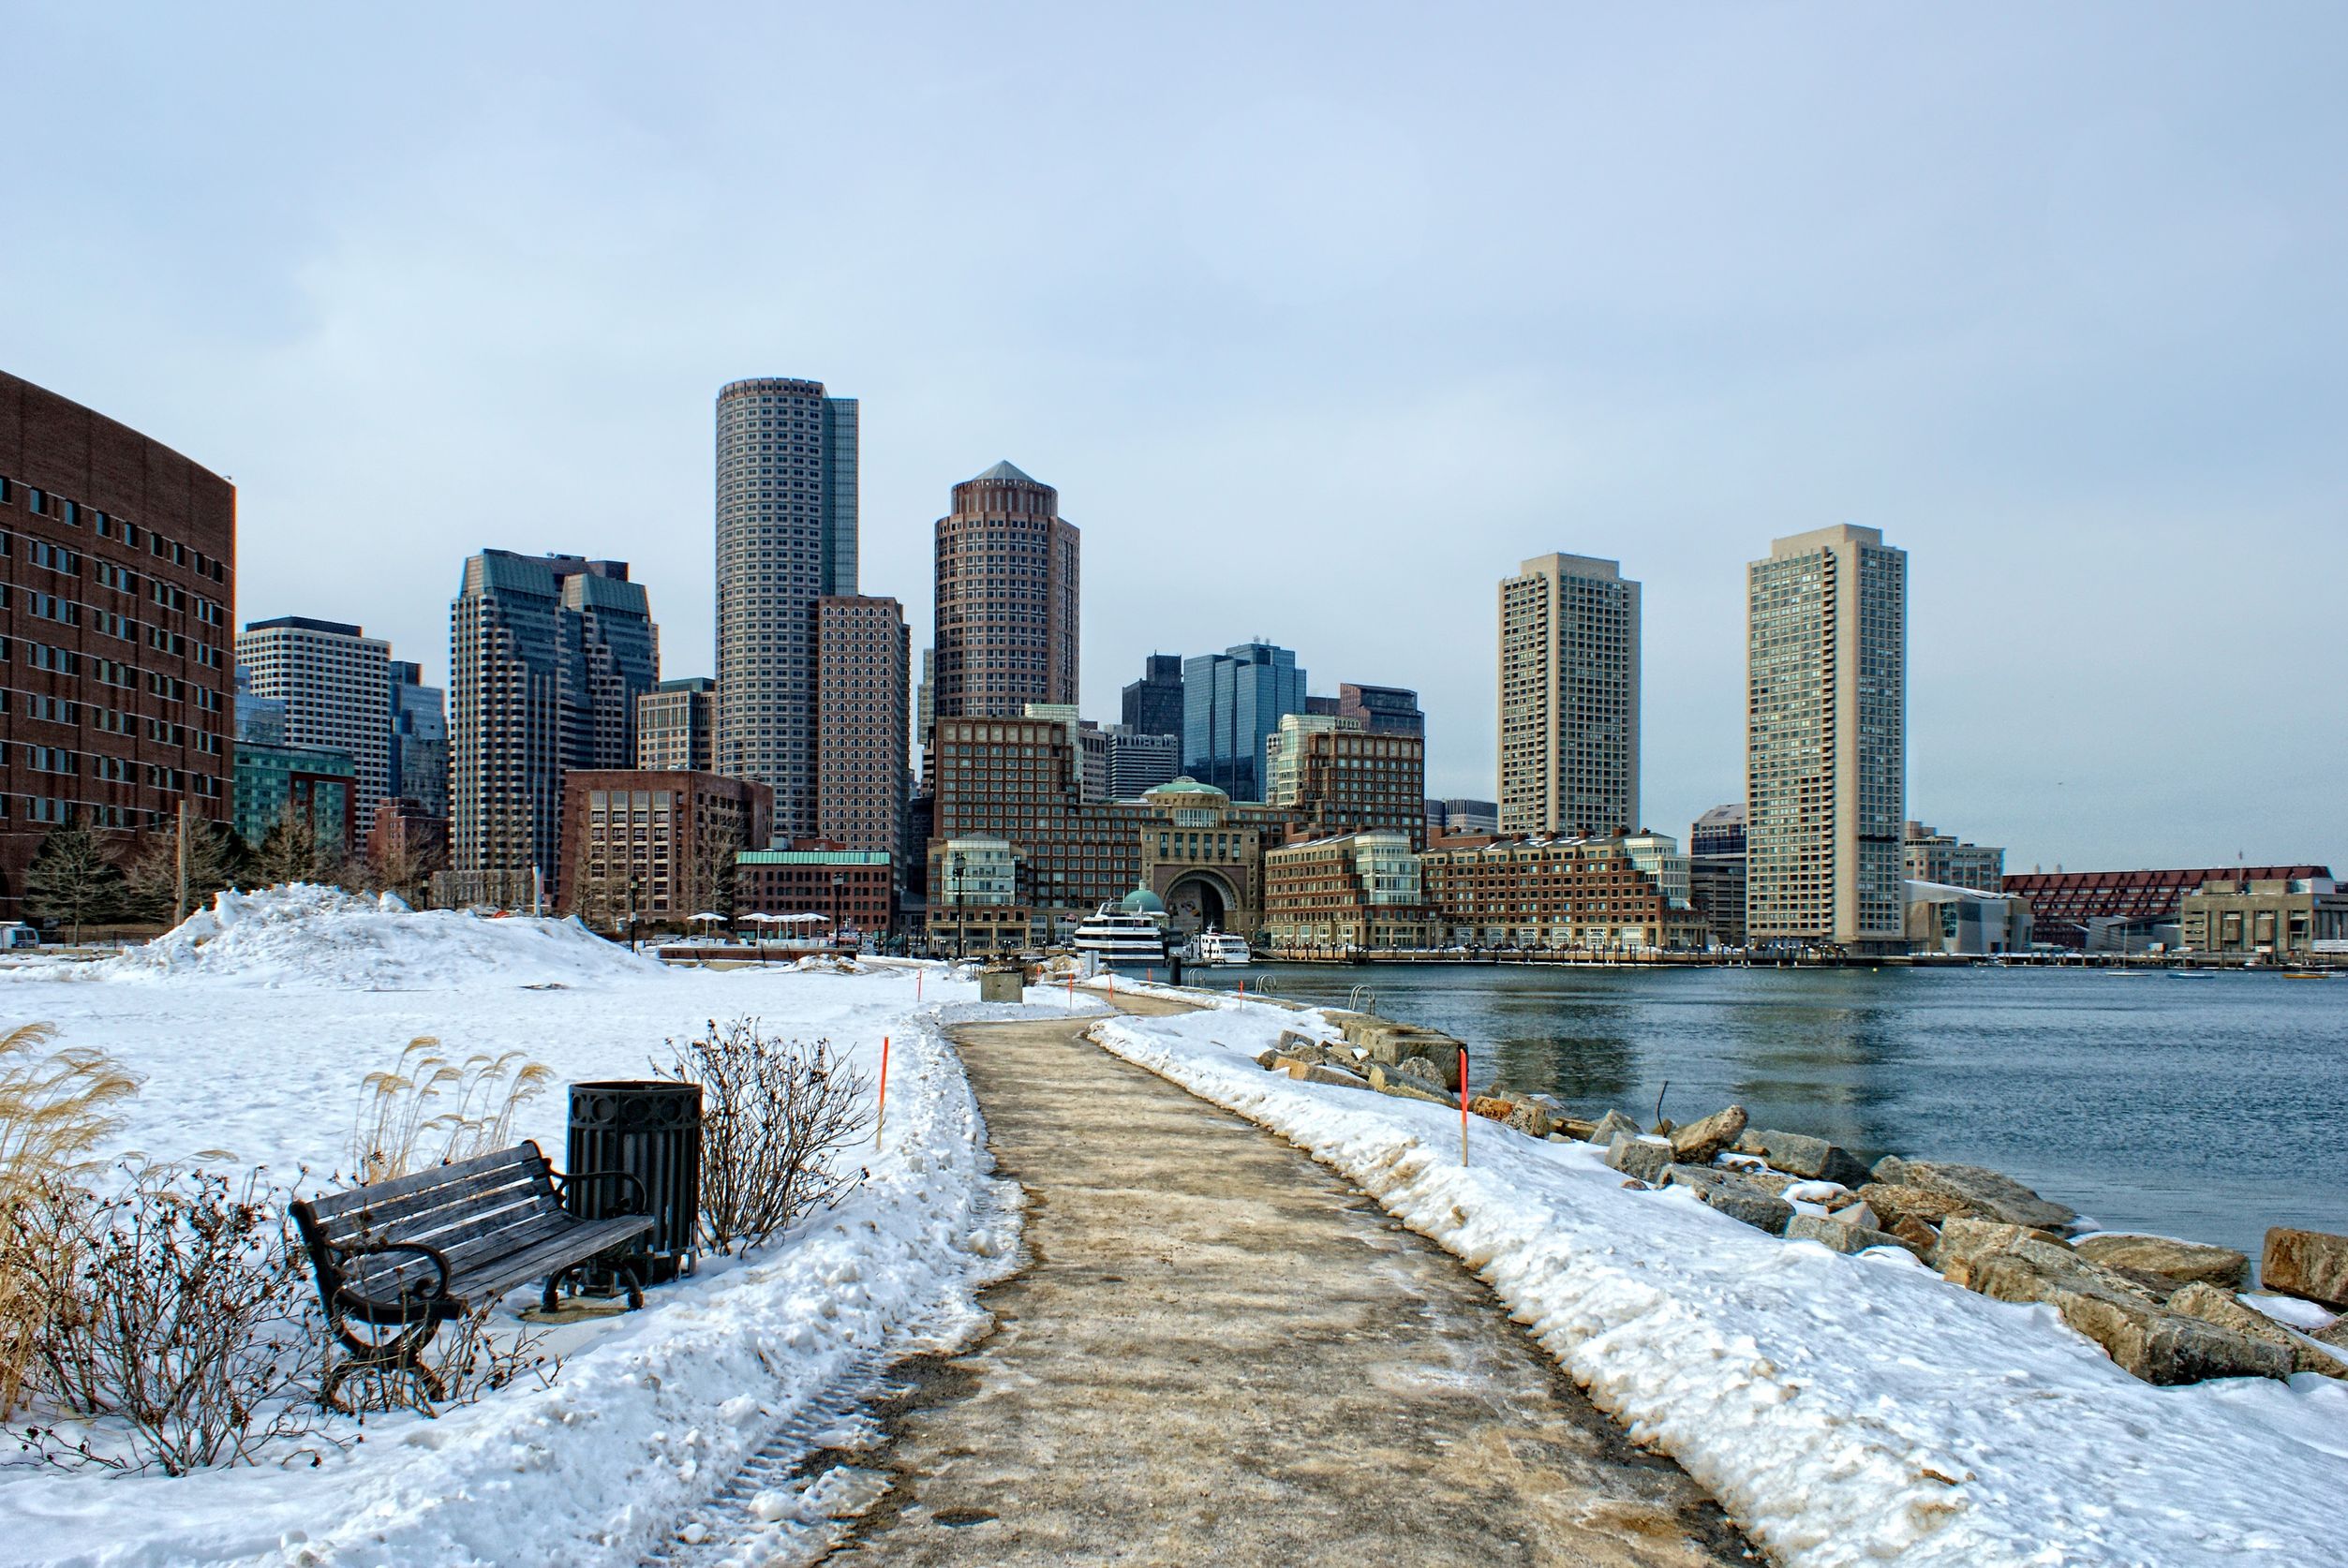 Winter bills in Boston